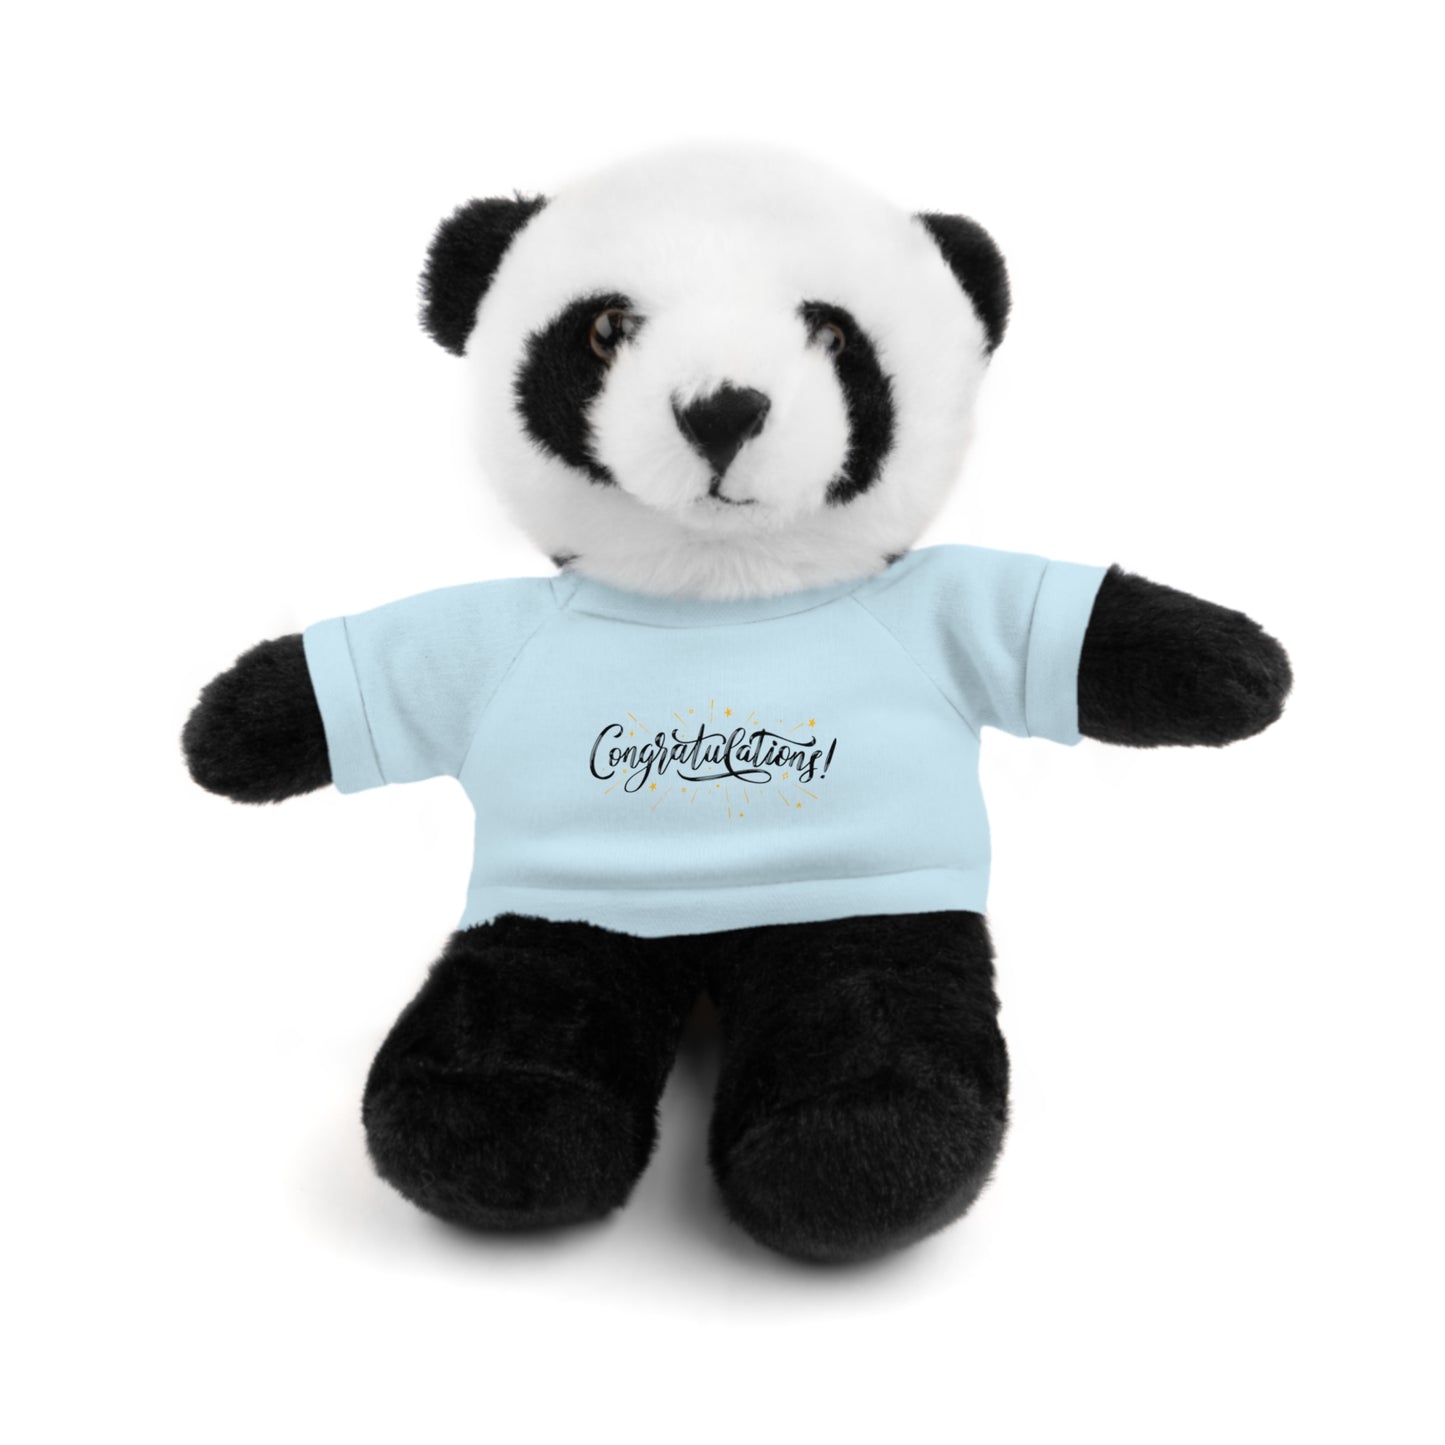 Stuffed Animals - Stuffed Animals with T-Shirt, Panda, Lion, Bear, Bunny, Jaguar, Sheep